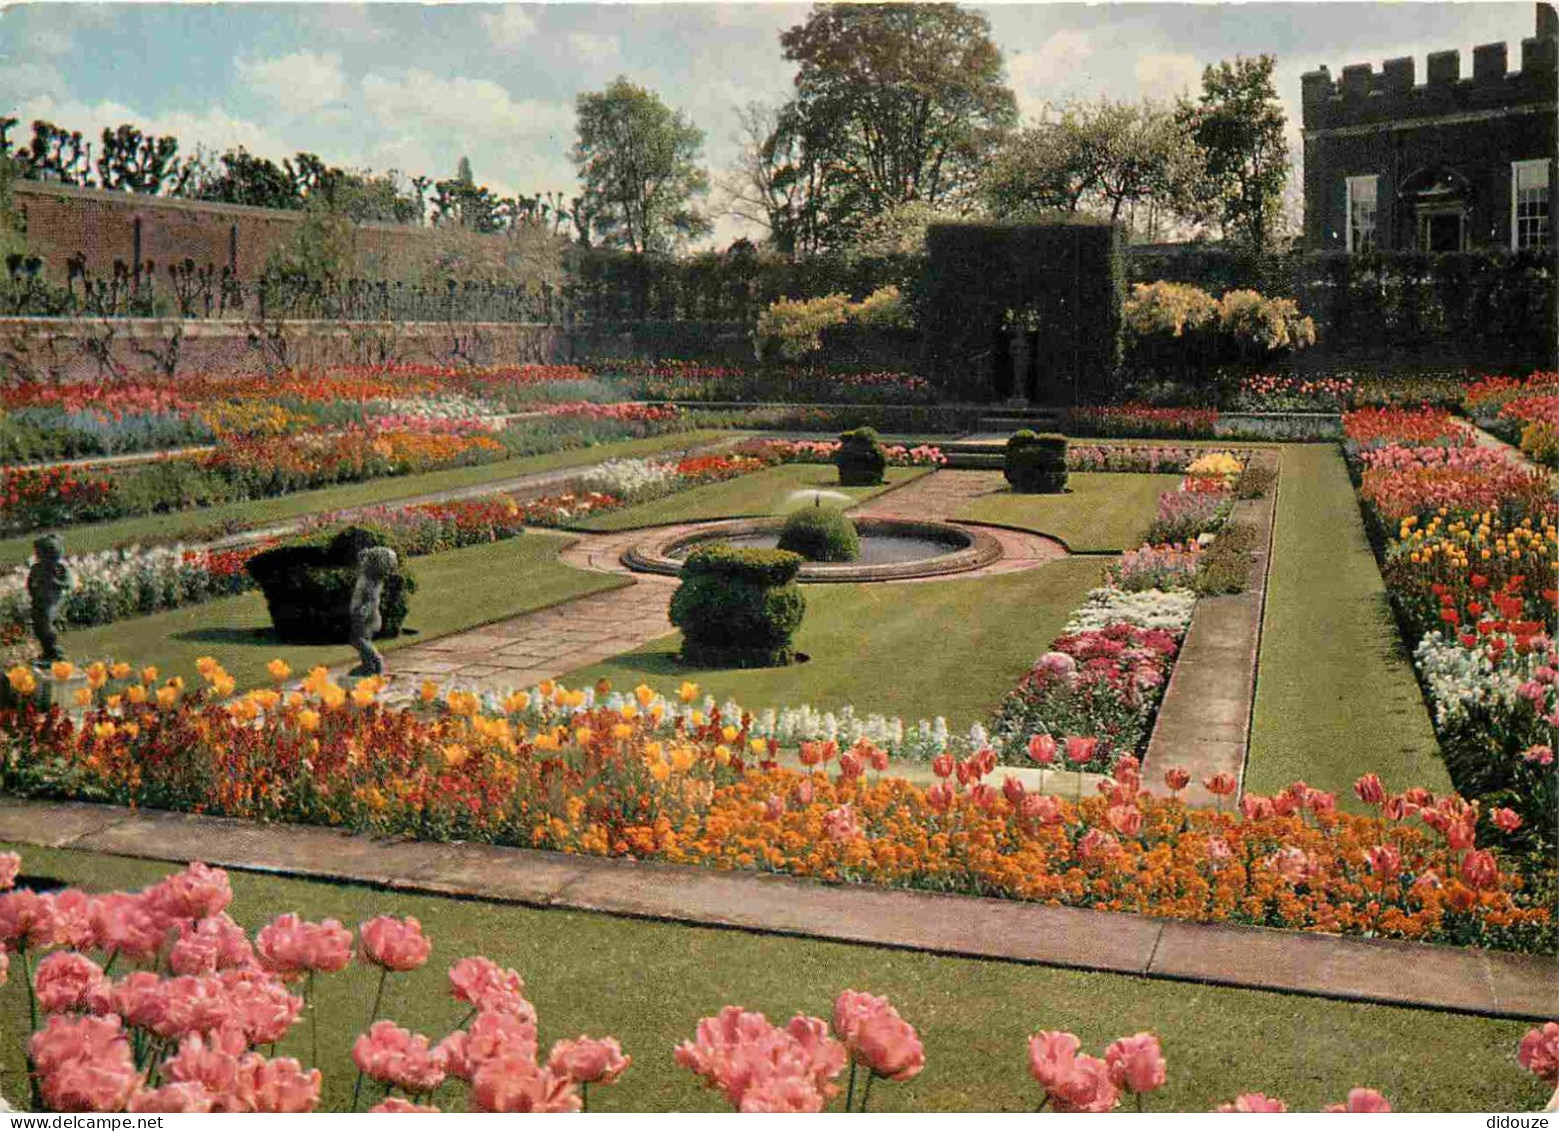 Angleterre - Hampton Court Palace - The Pond Garden - Middlesex - England - Royaume Uni - UK - United Kingdom - CPM - Vo - Middlesex